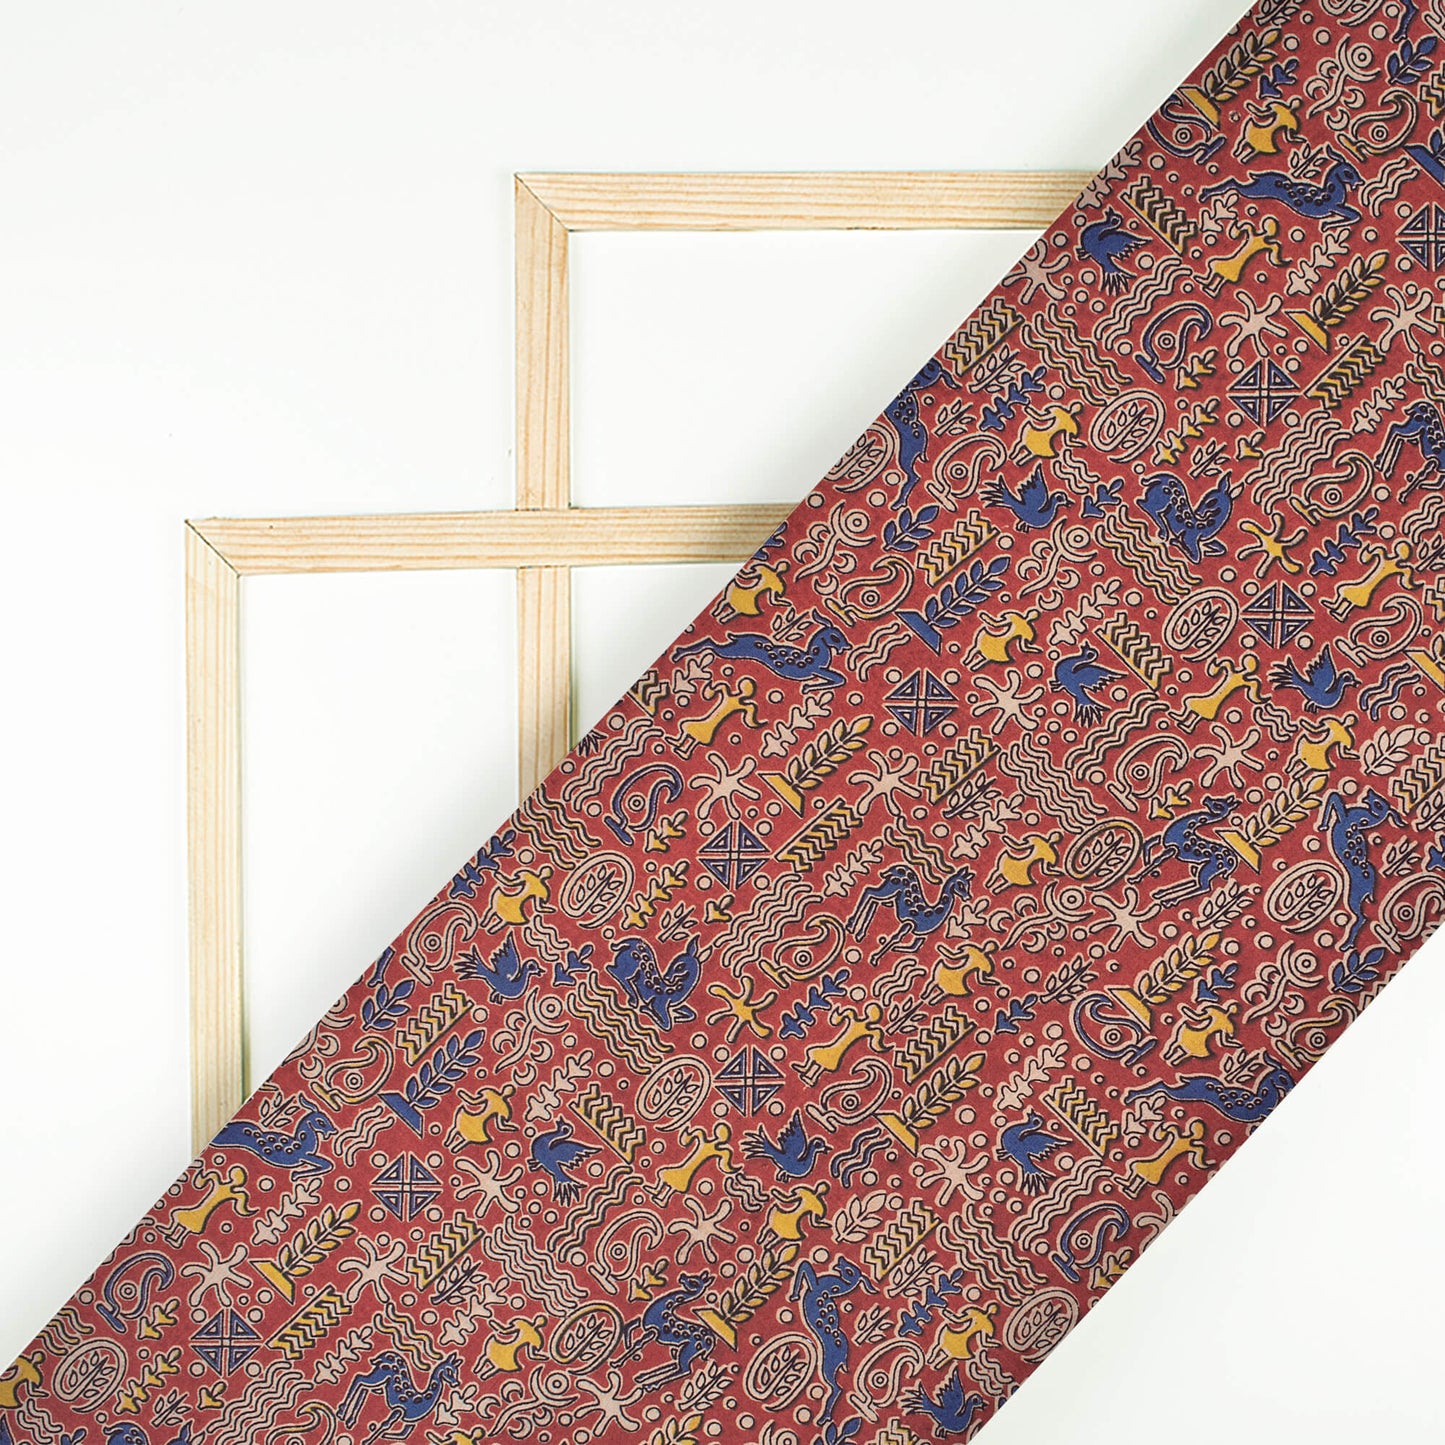 Persian Red And Oxford Blue Egyptian Pattern Printed Kalamkari Cotton Fabric